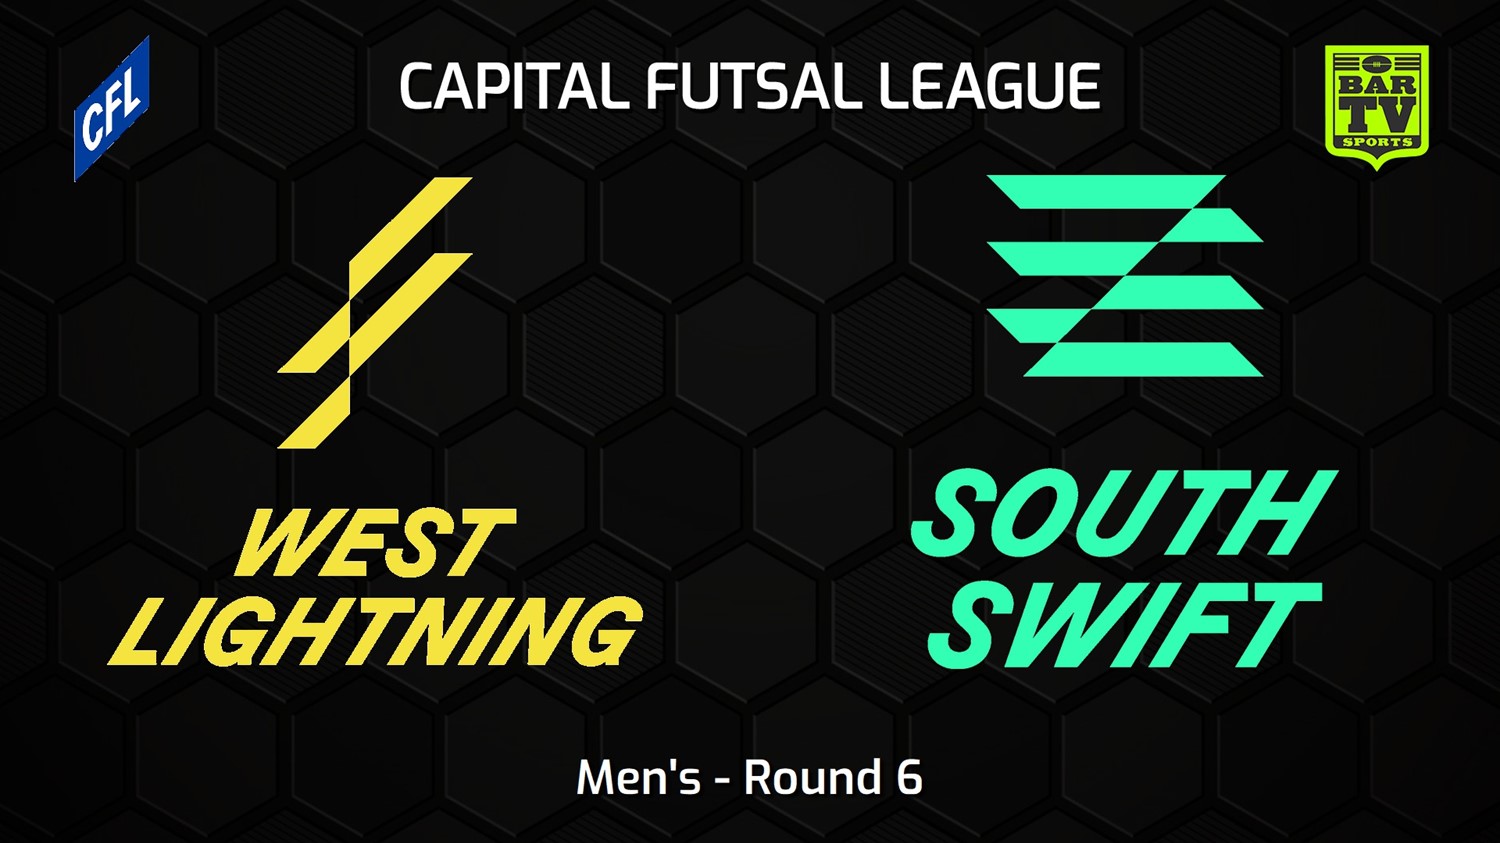 221203-Capital Football Futsal Round 6 - Men's - West Canberra Lightning v South Canberra Swift Minigame Slate Image